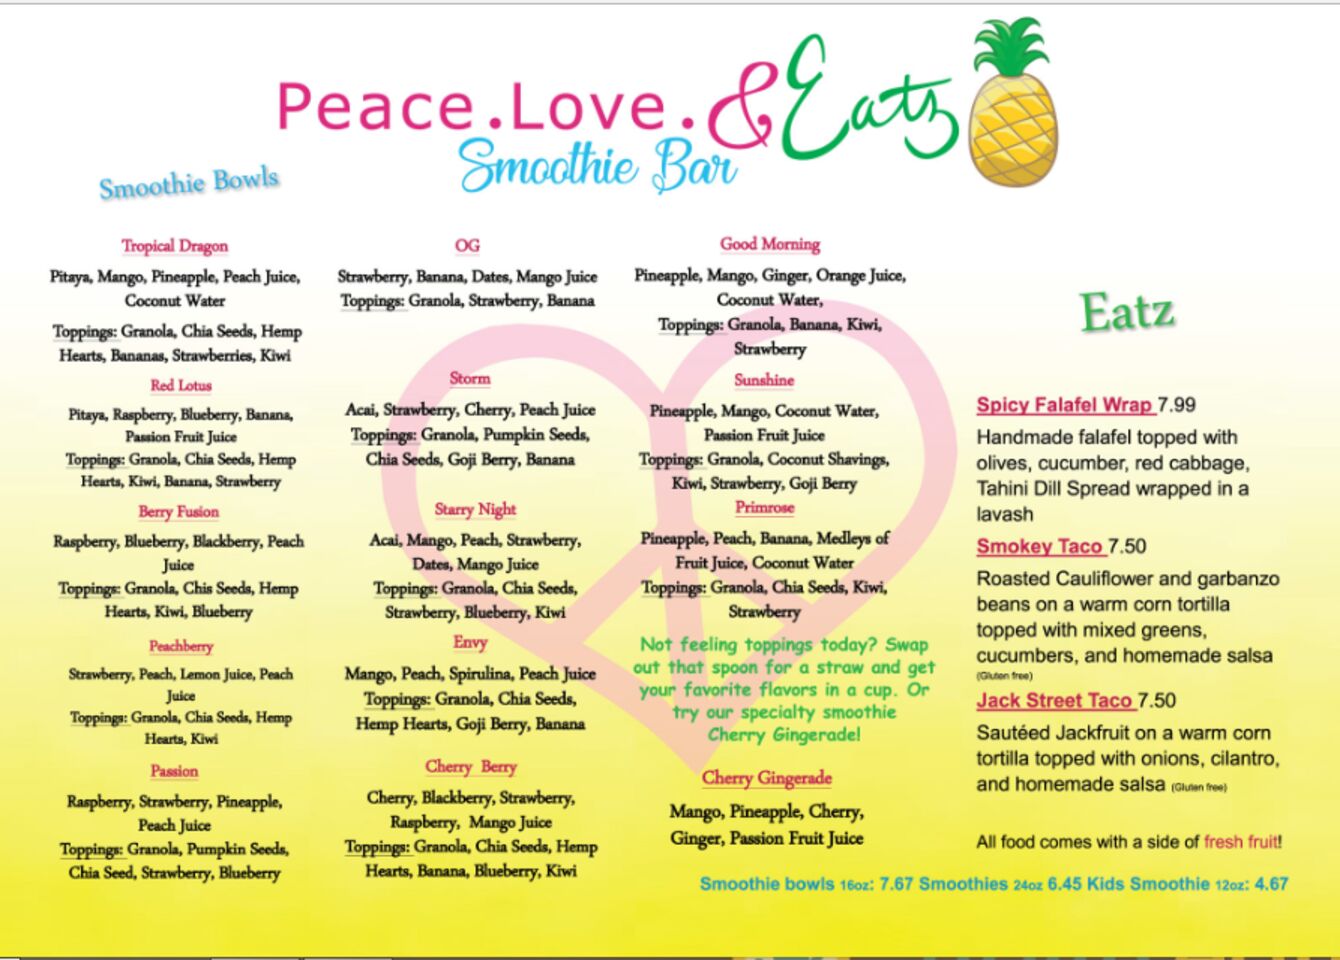 A photo of Peace. Love. & Eatz Smoothie Bar